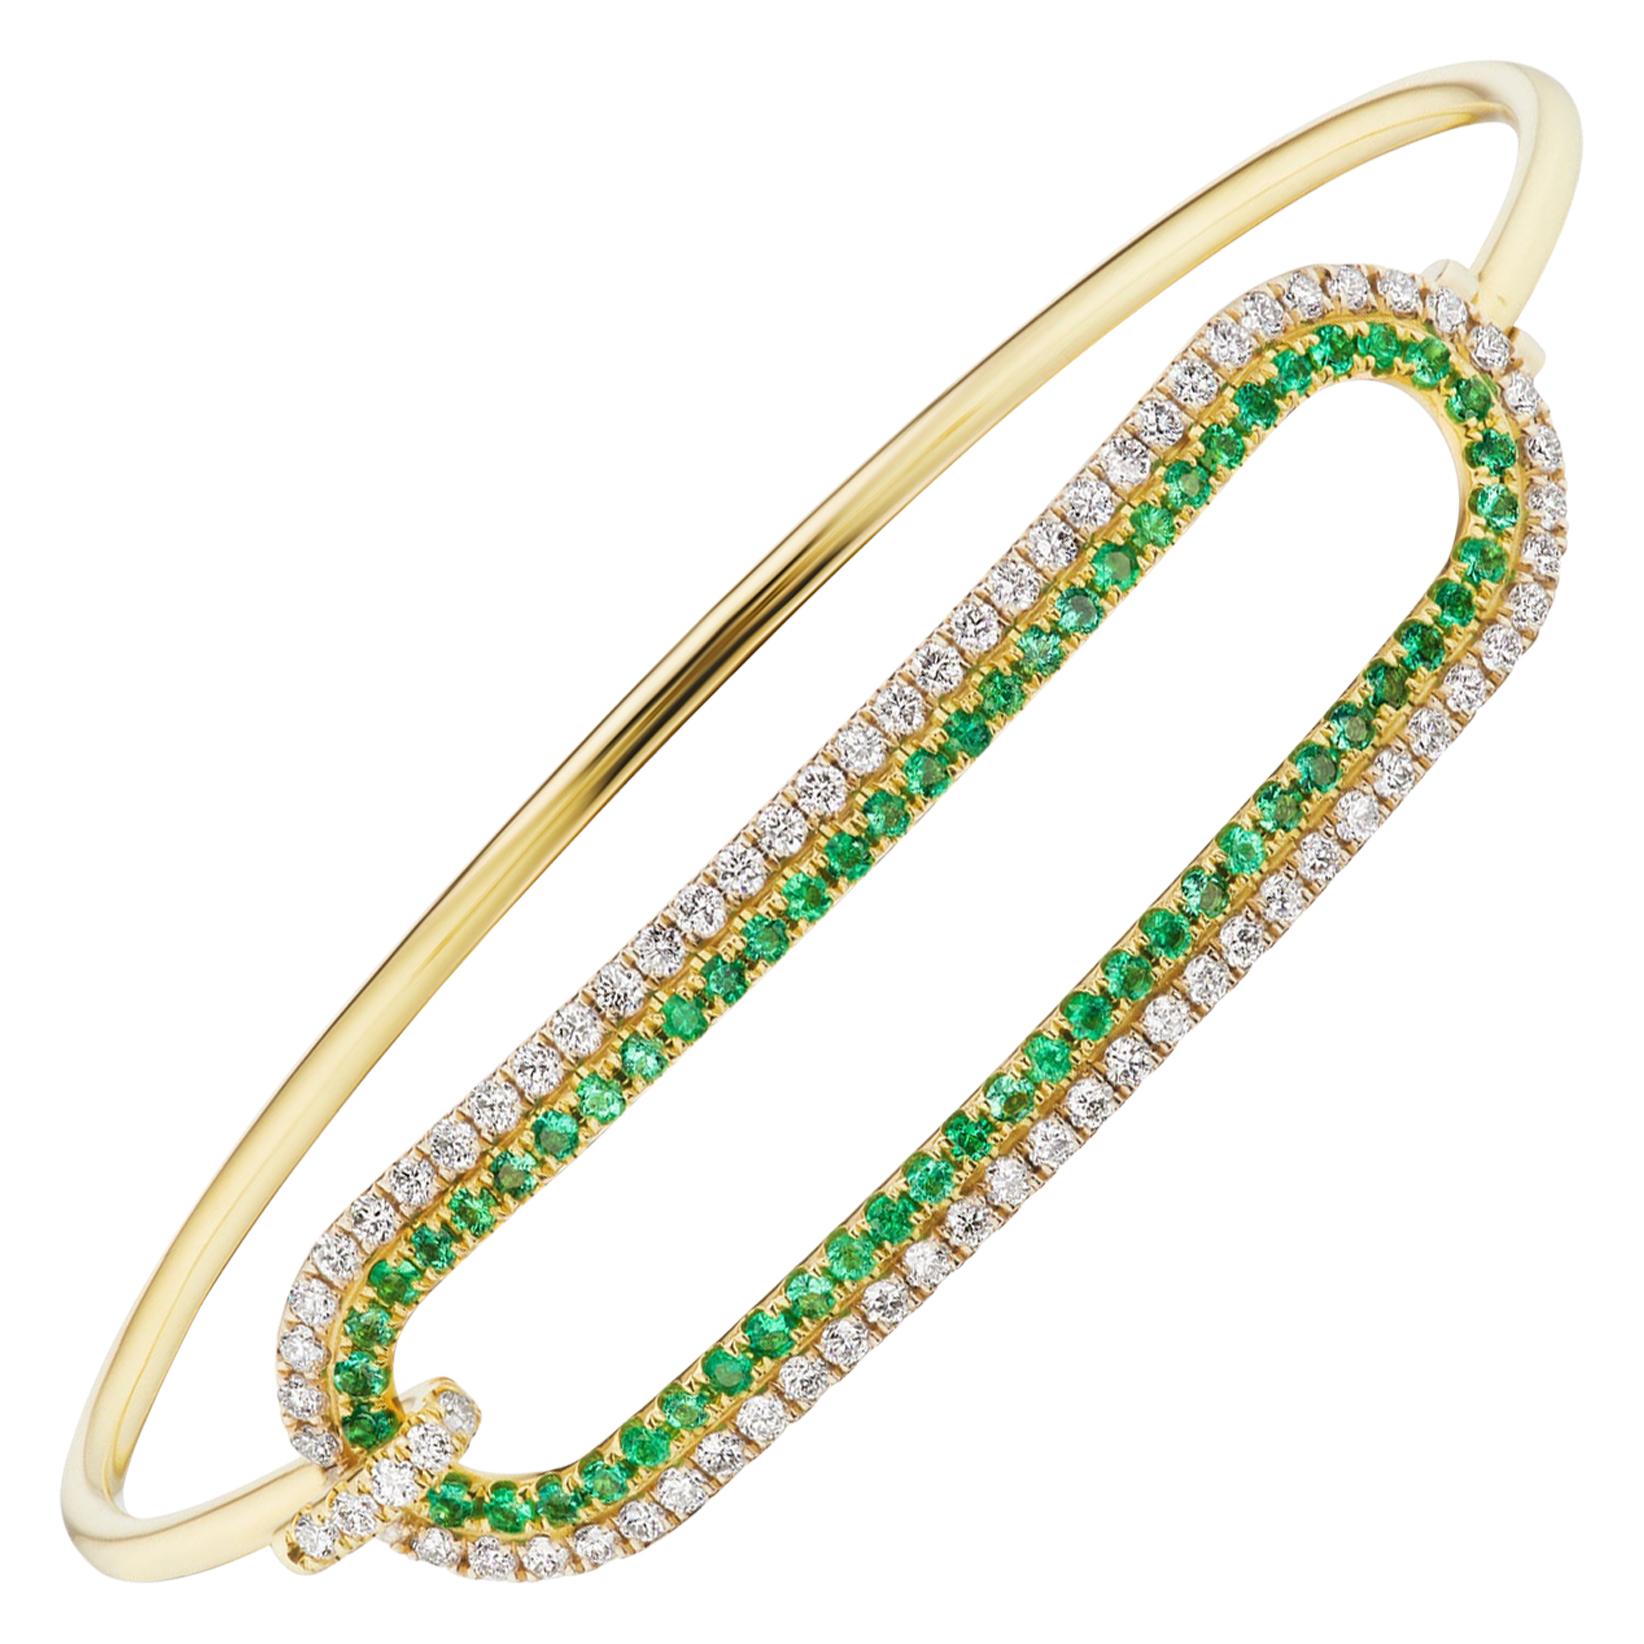 Emerald and Diamond Tension Bracelet in 18 Karat Gold